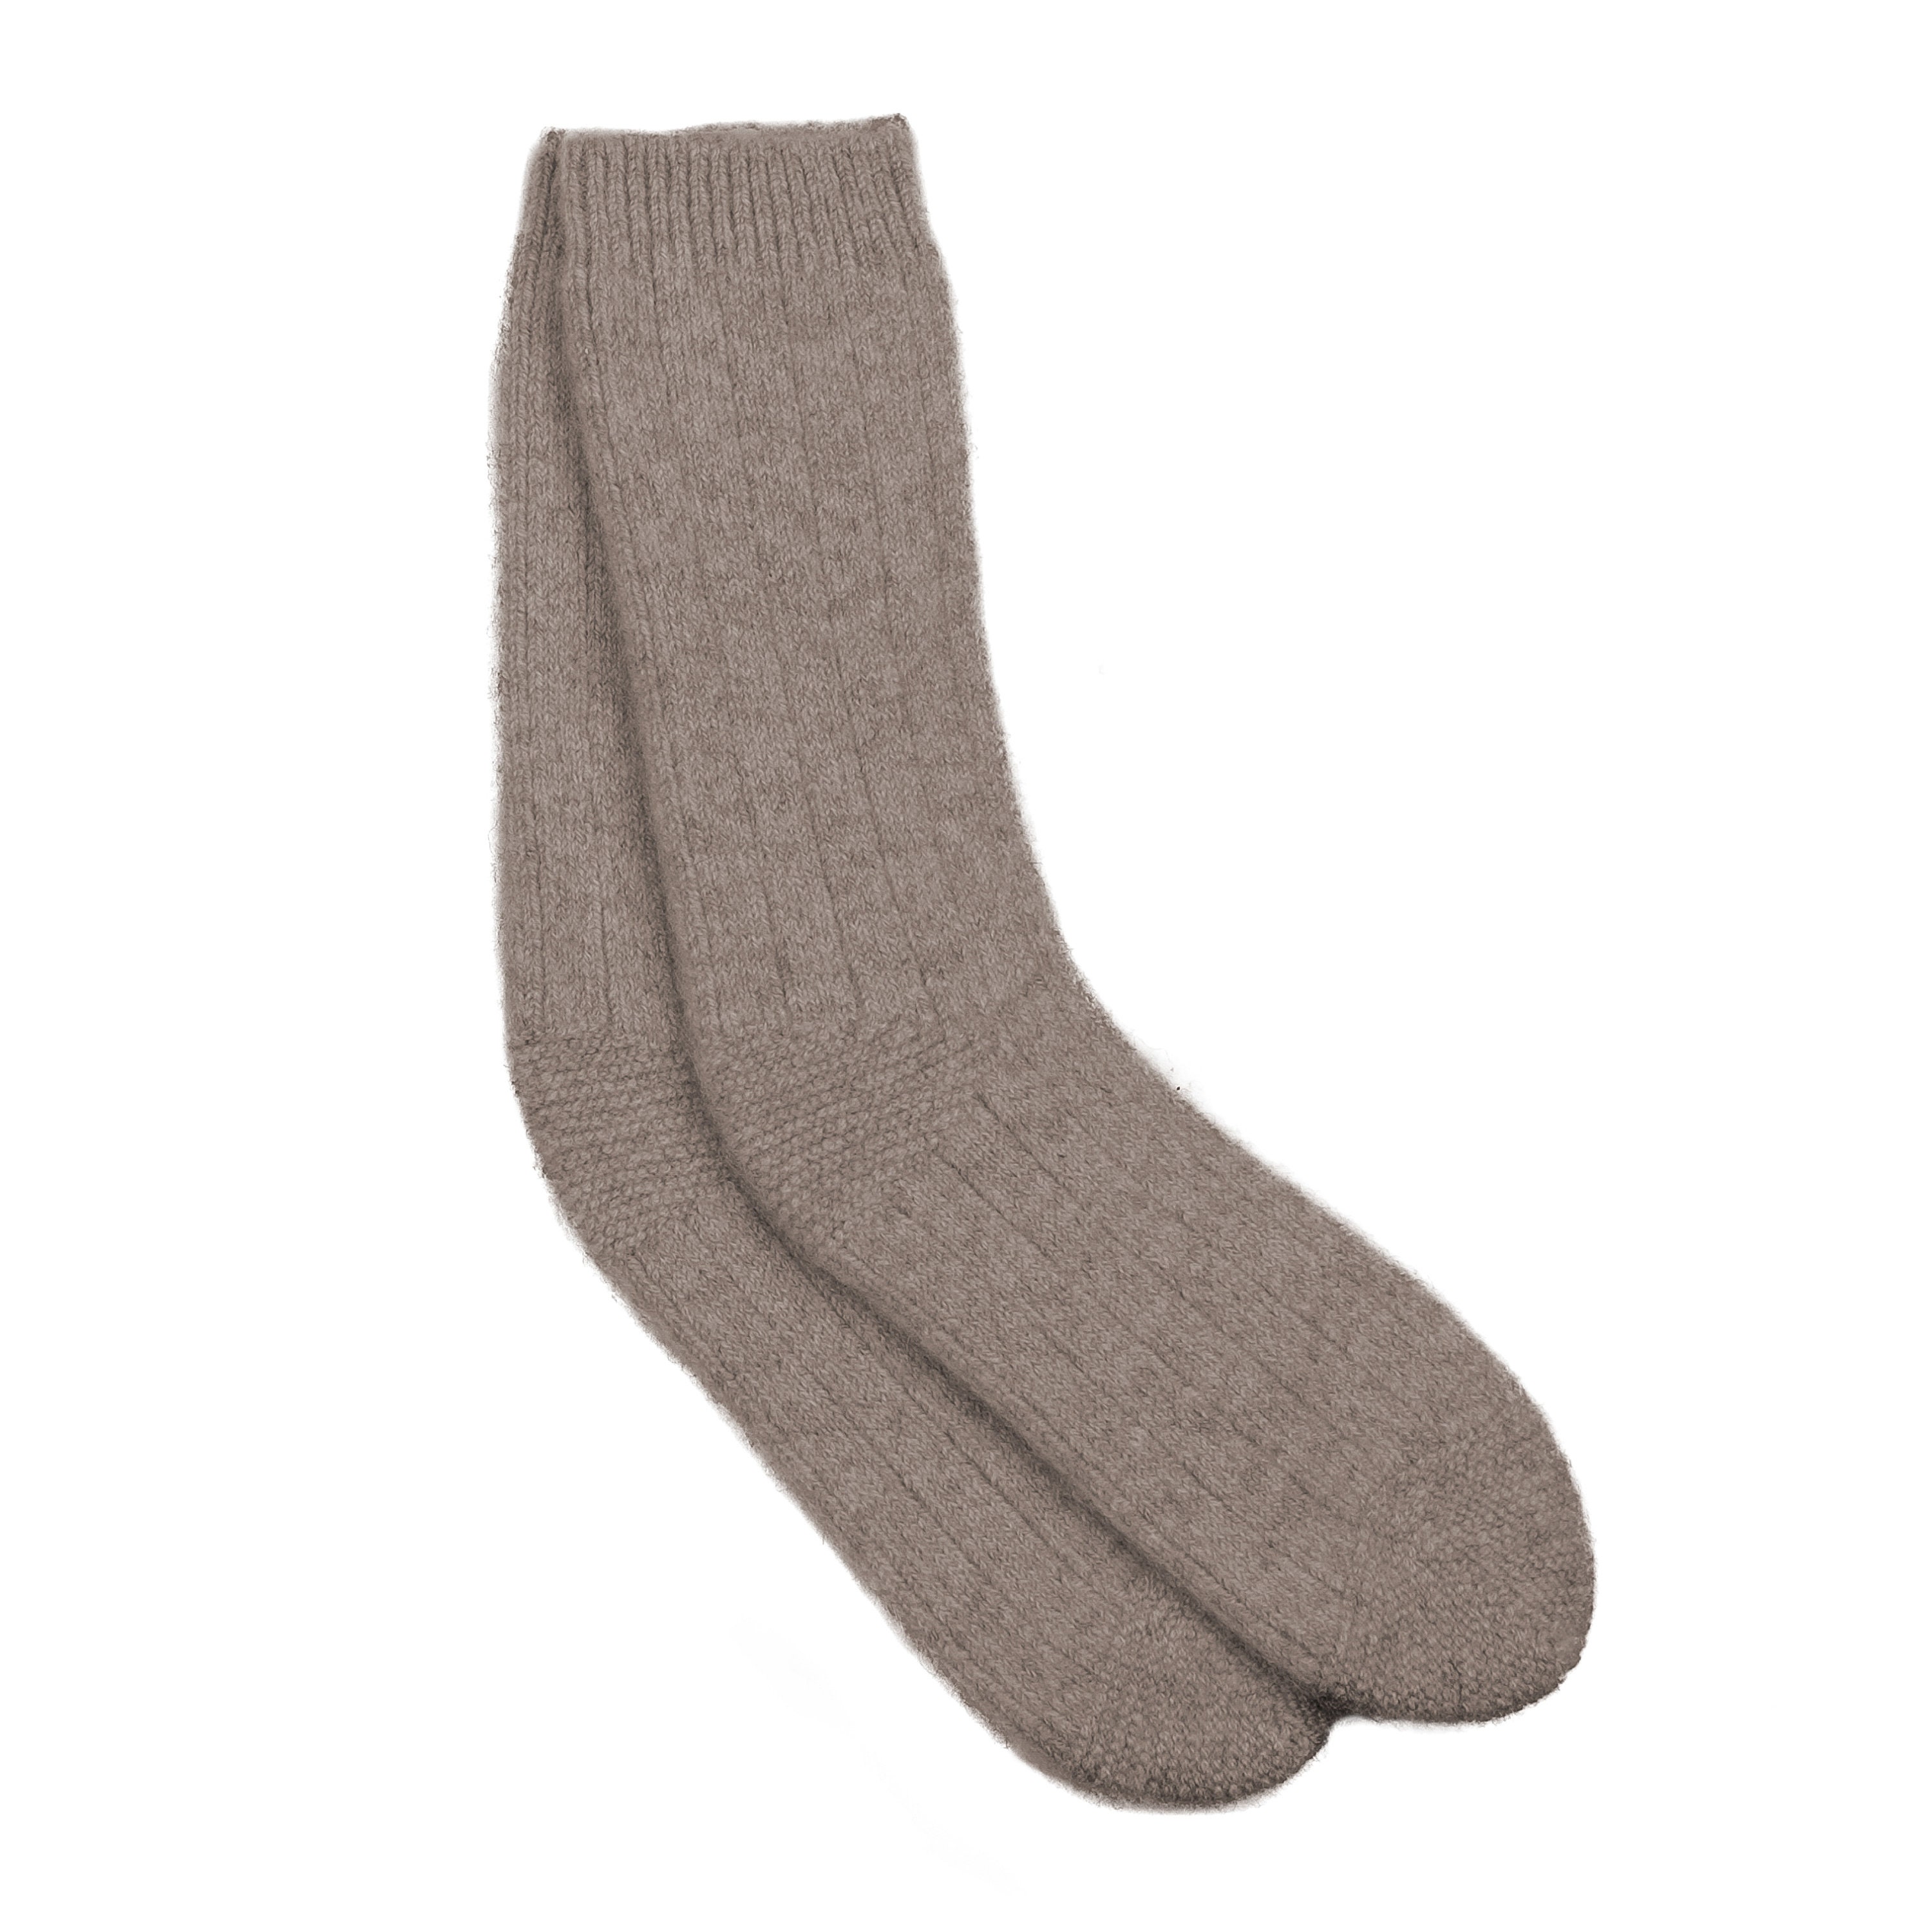 Cosy Grey Tan cashmere socks | Etsy